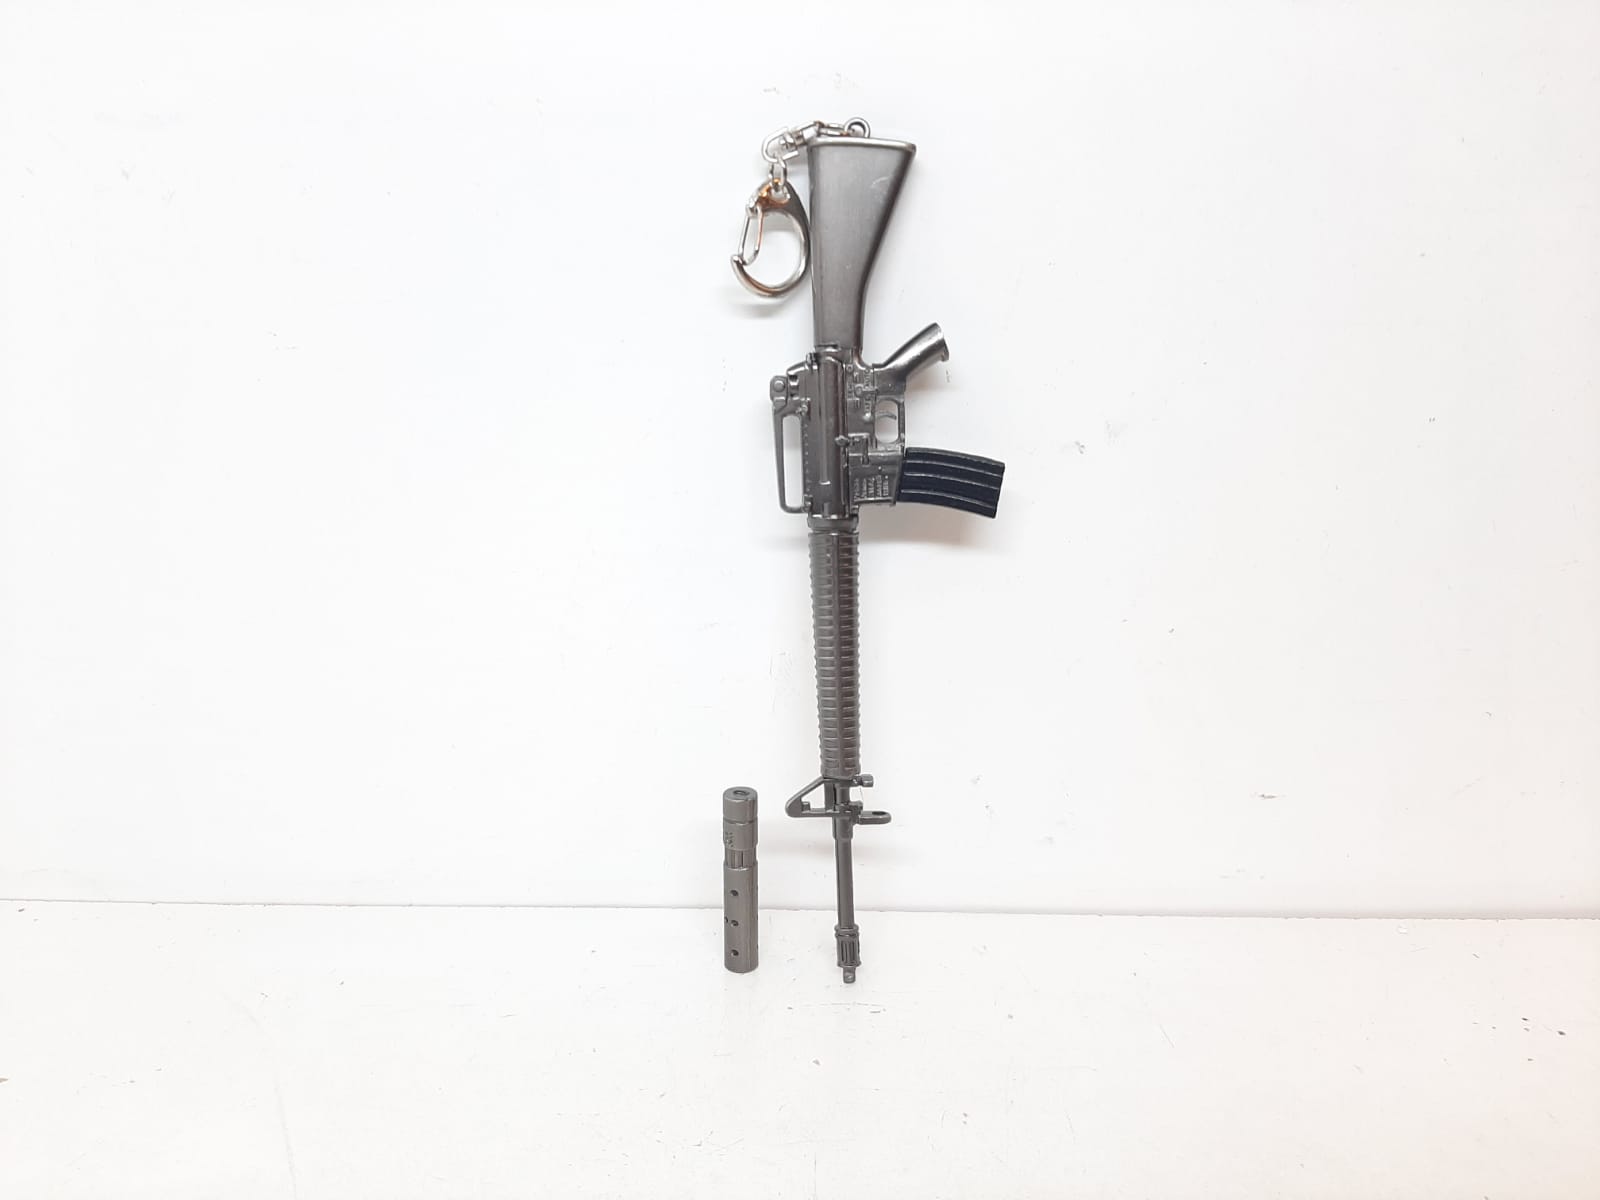 Nyckelring: M16 Colt miniatyr